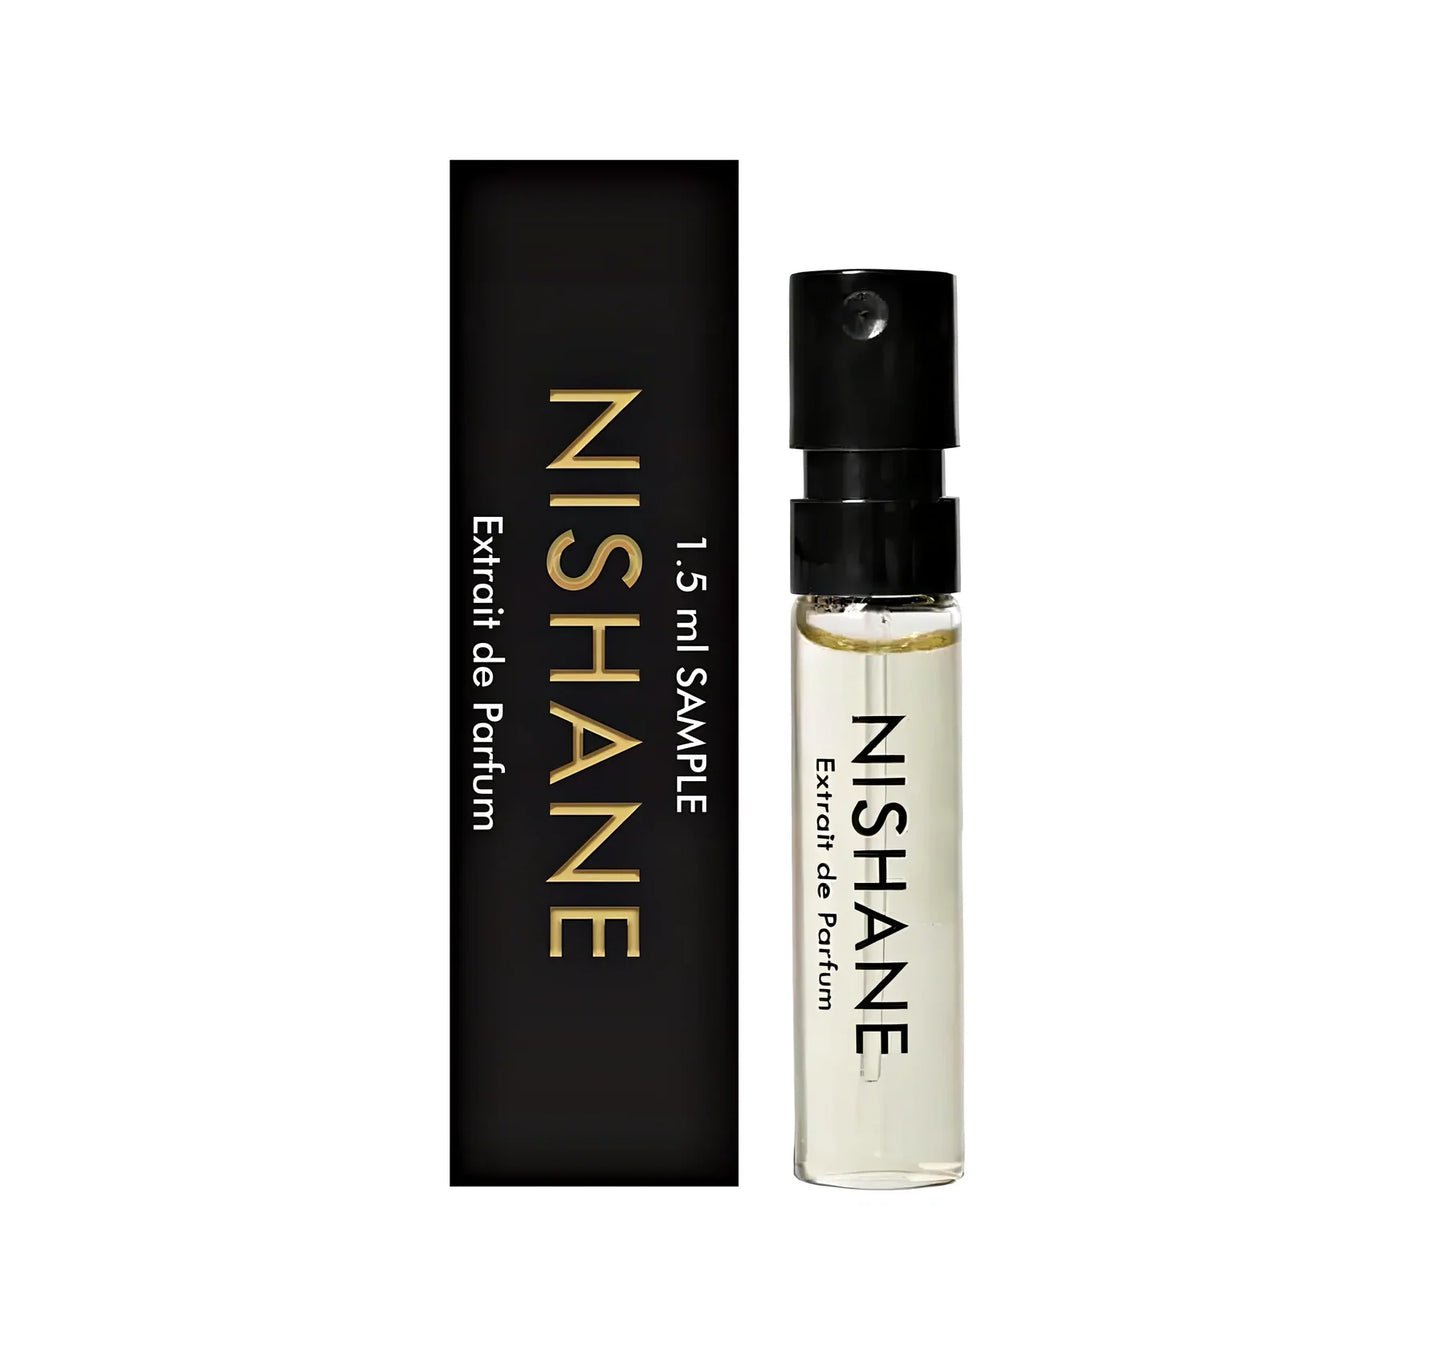 Hundred Silent Ways X Nishane Extrait de Parfum Sample 2ml